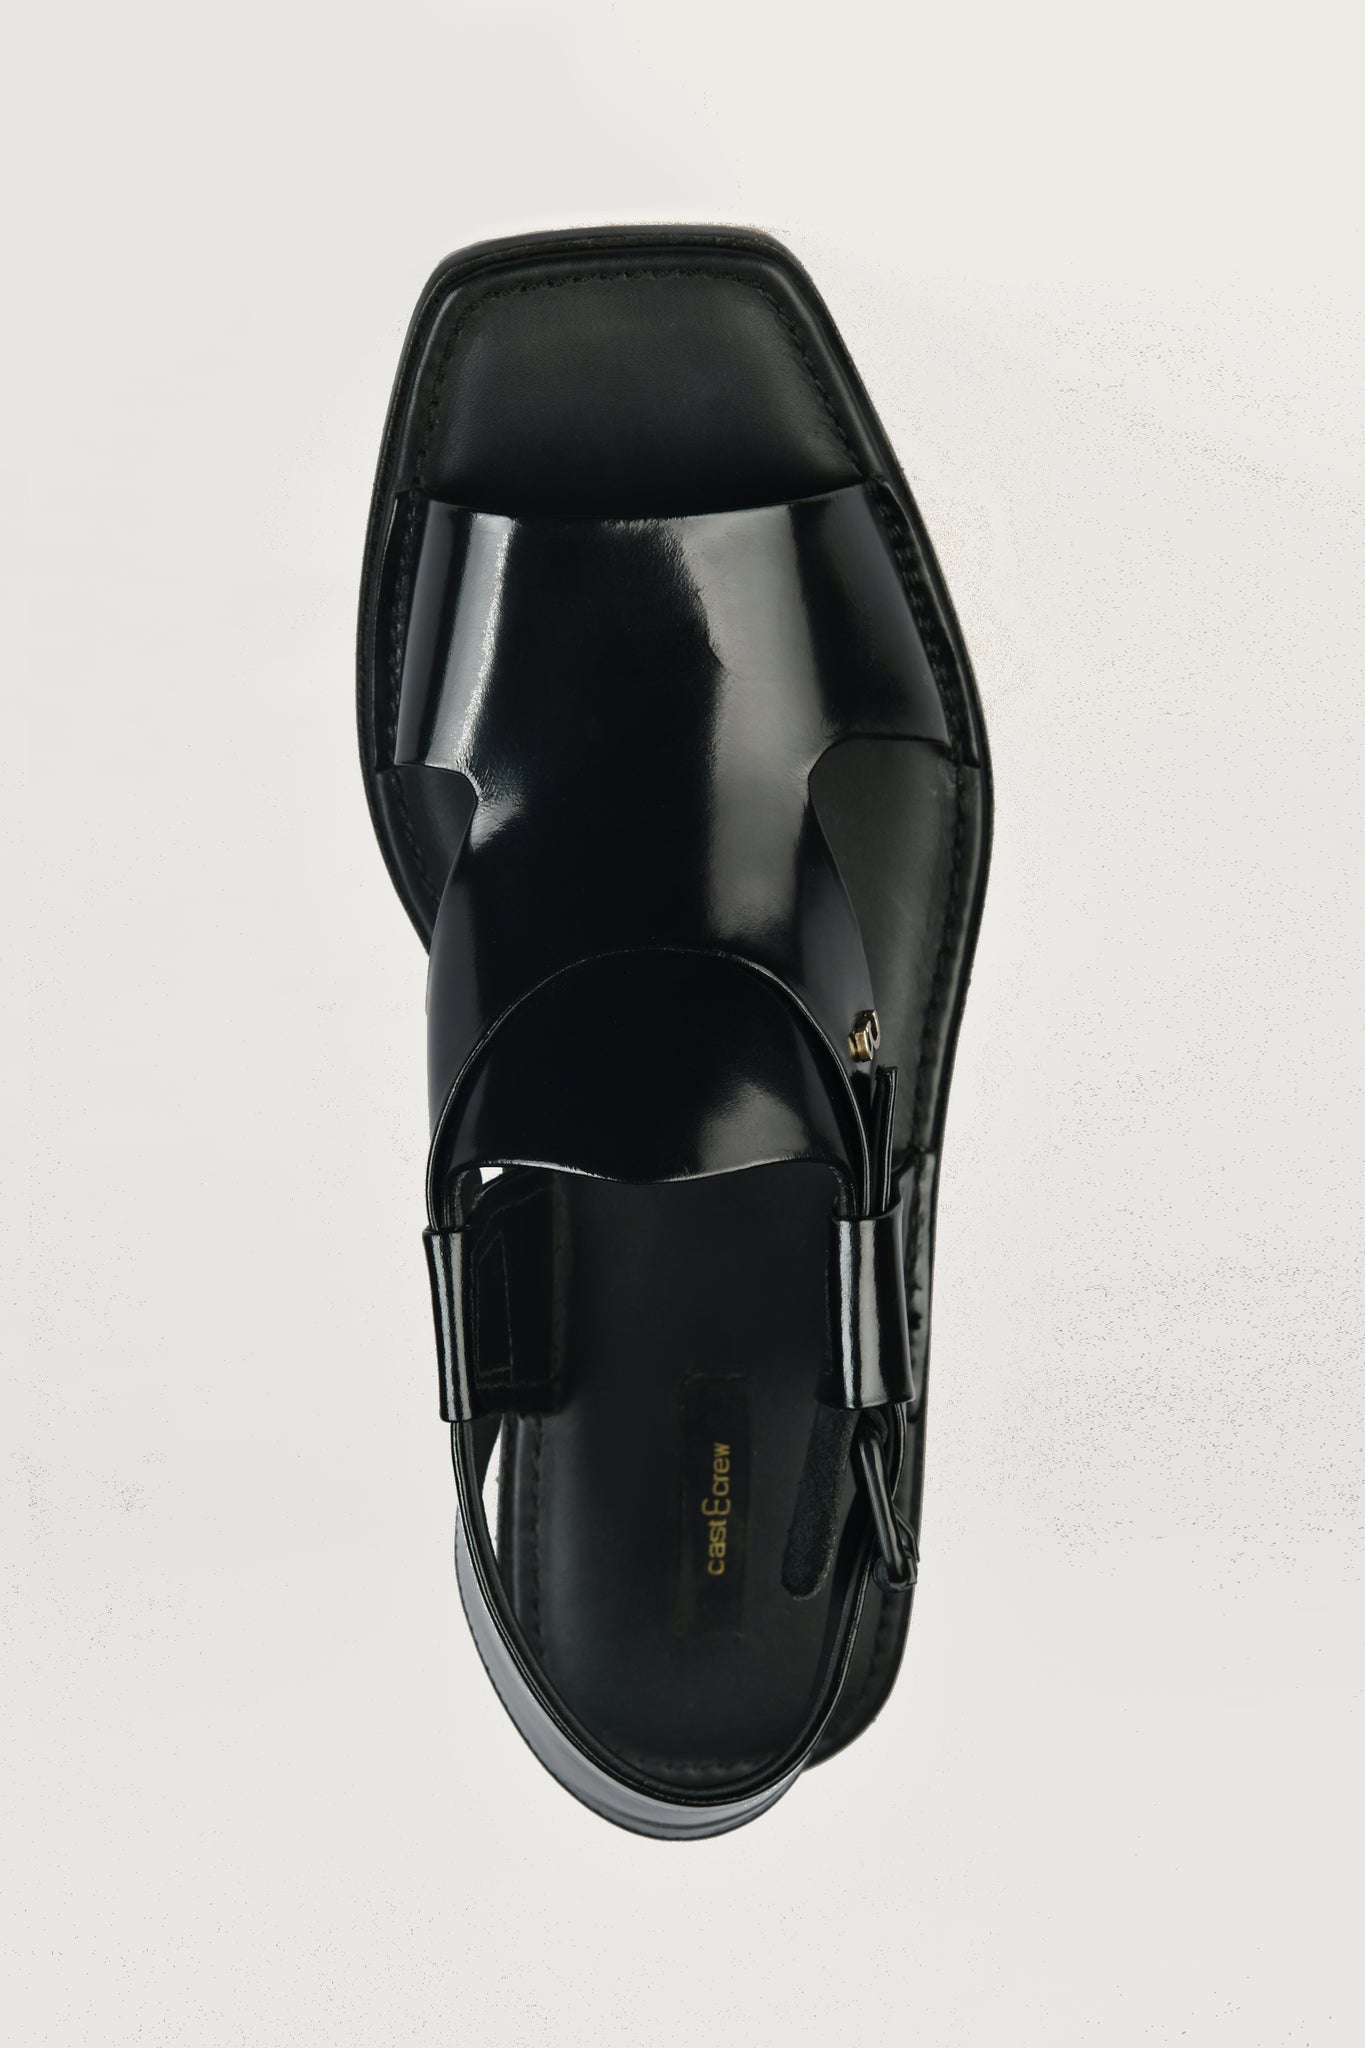 ROOKS - Black Leather Sandals